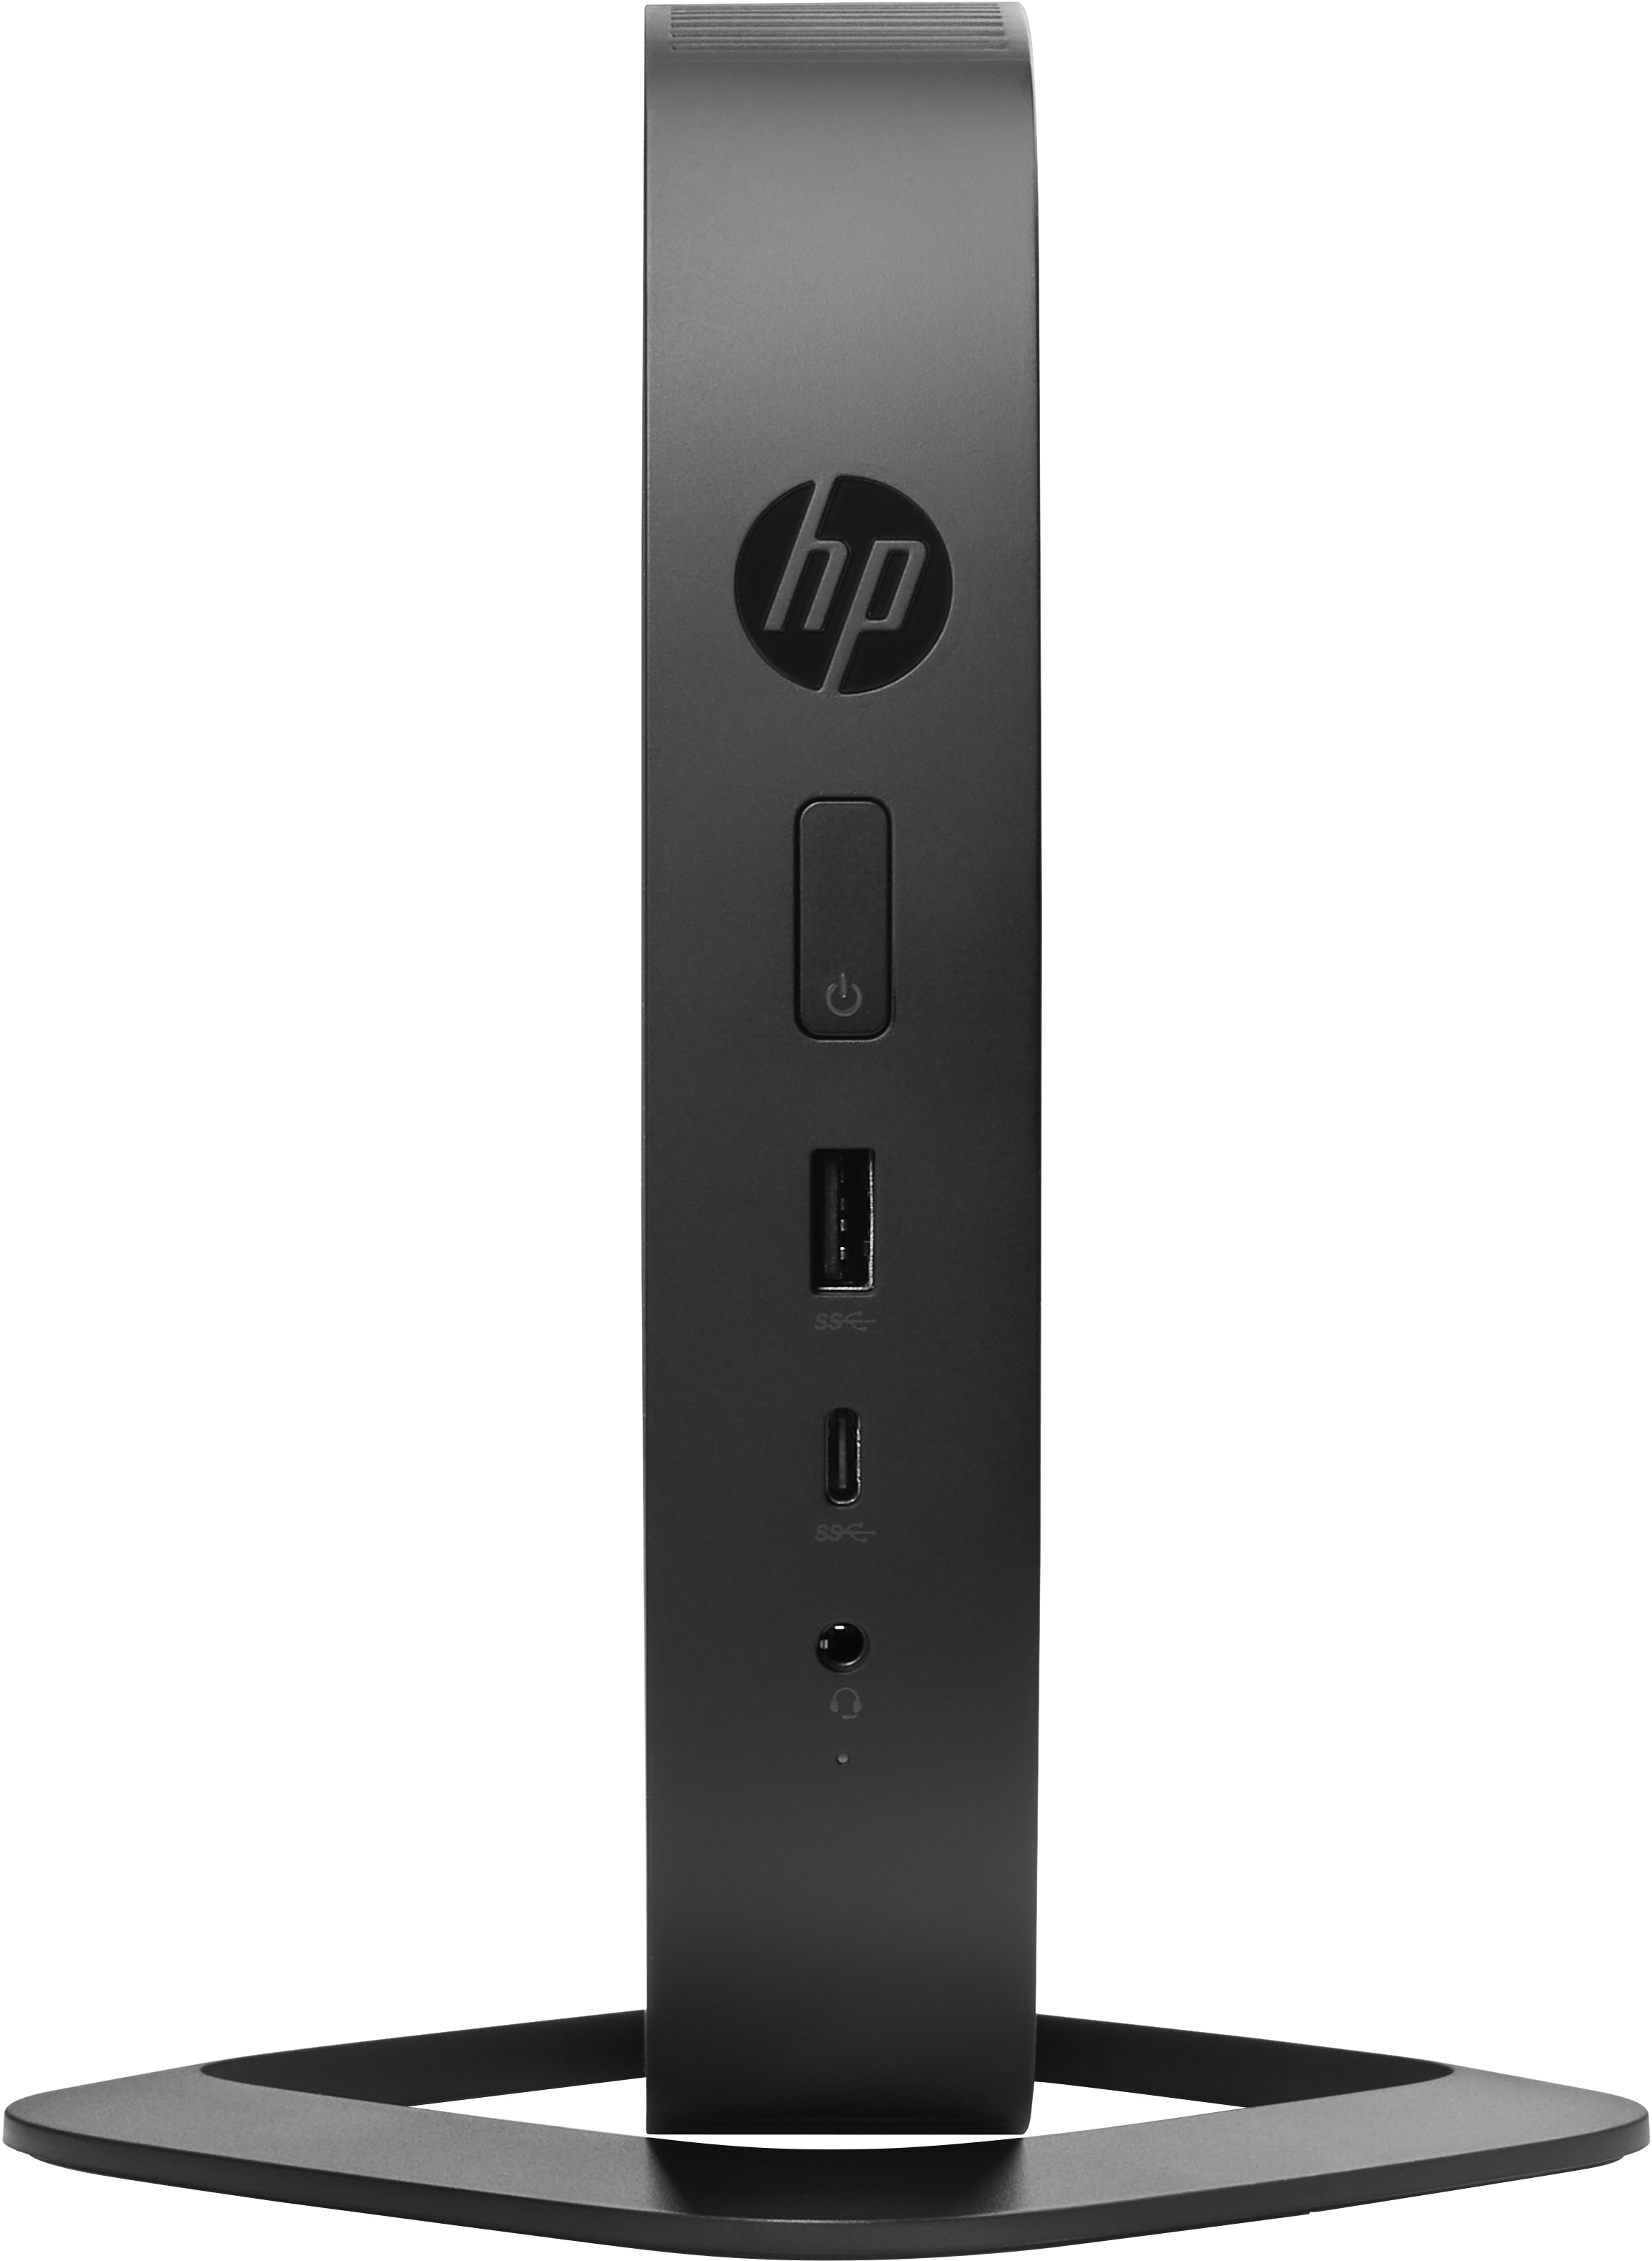 HP t530 - Thin client - tower - 1 x GX-215JJ 1.5 GHz - RAM 4 GB - flash 32 GB - MLC - Radeon R2E - GigE - Win Embedded Standard 7E 32-bit (includes Win 10 IoT License) - monitor: none - keyboard: US